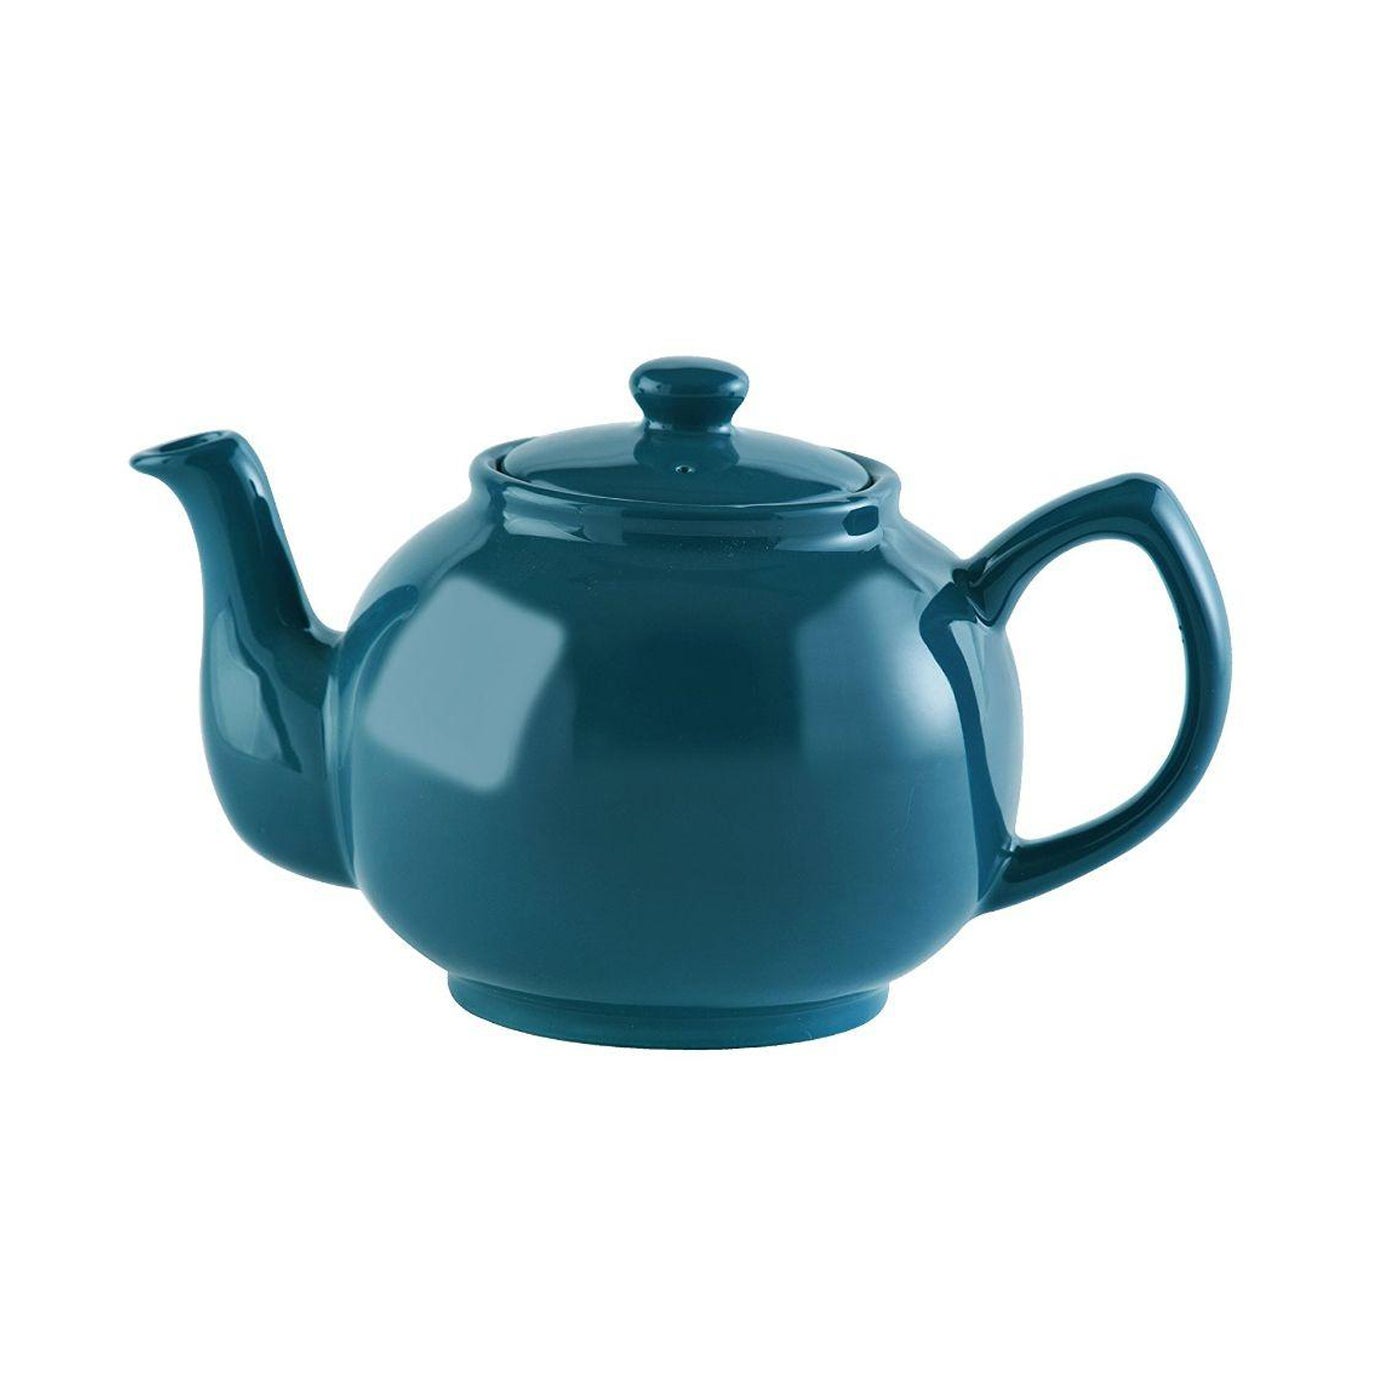 PRICE & KENSINGTON BRIGHTS Teapot 6 cup - KitchenEnvy